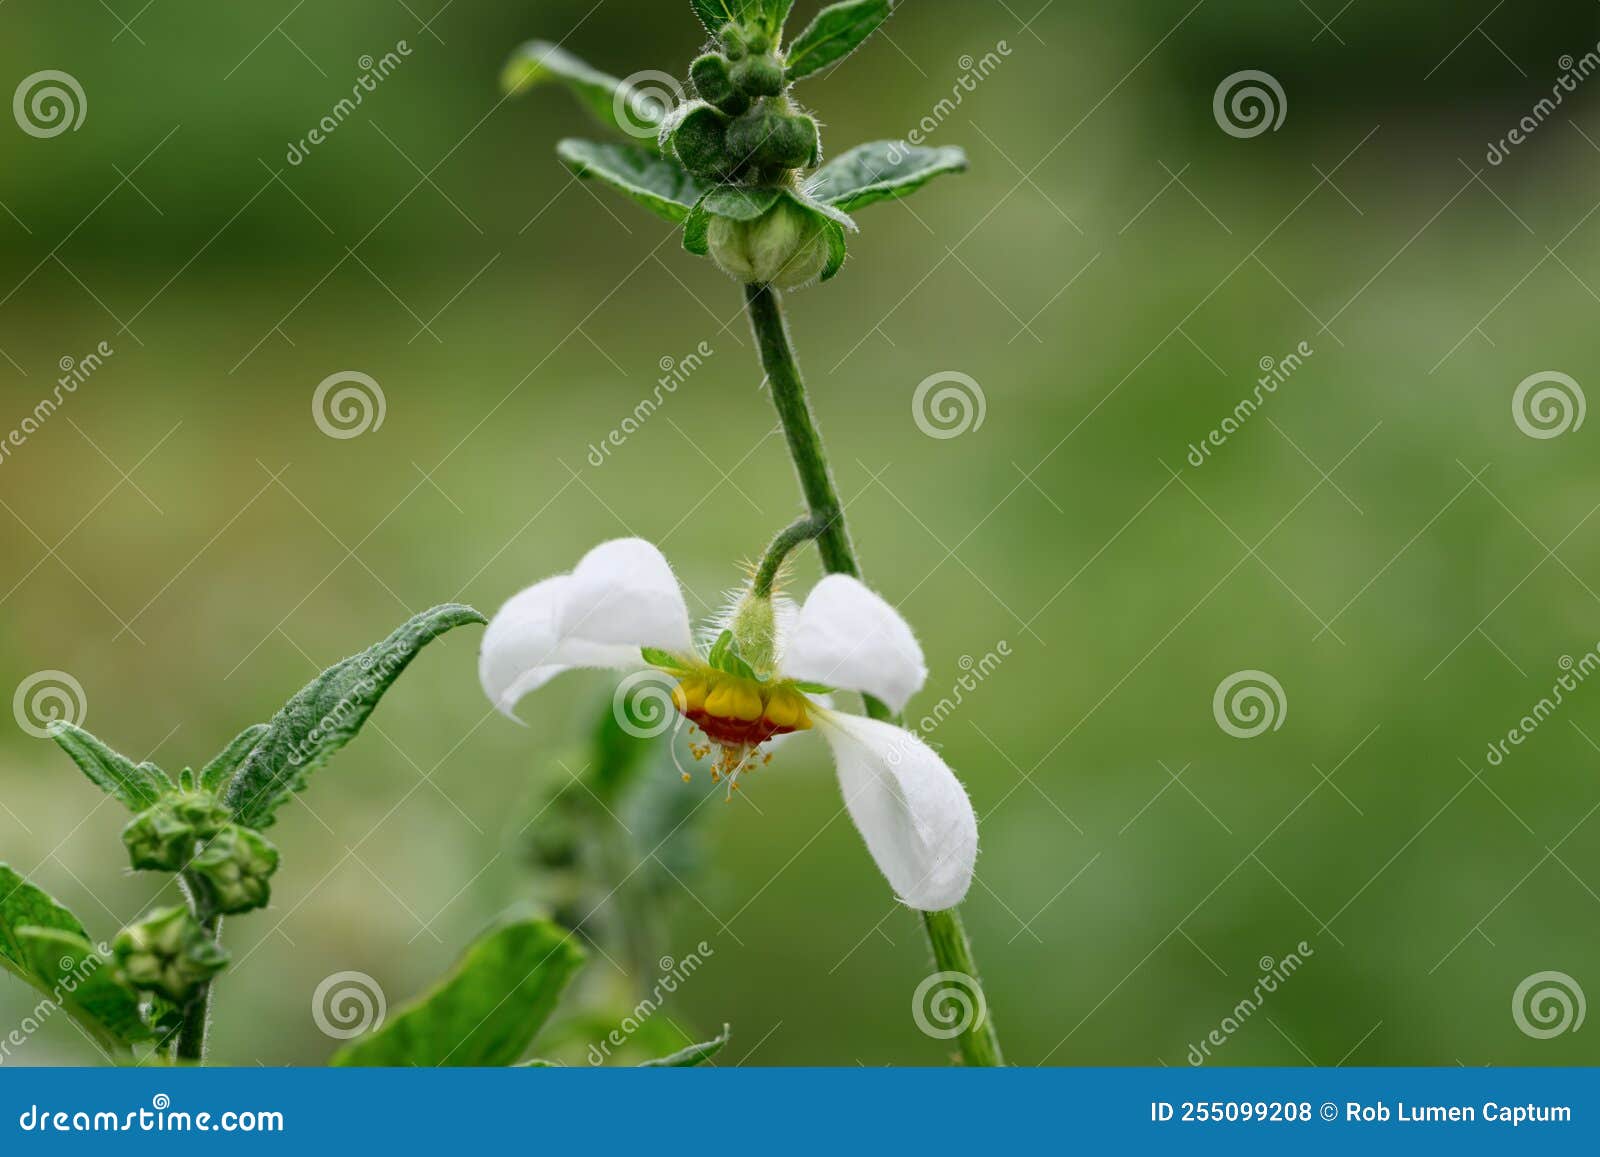 chilean stinging nettle loasa triphylla var. vulcanica a pending white flower